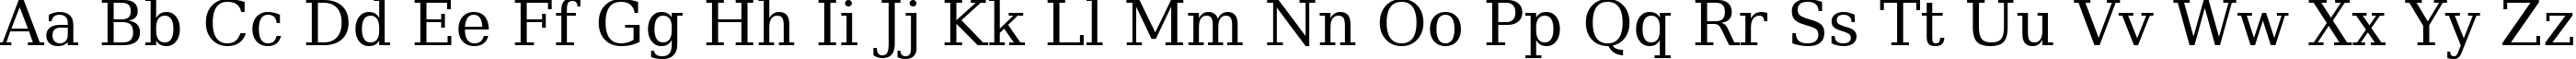 Пример написания английского алфавита шрифтом ae_Electron